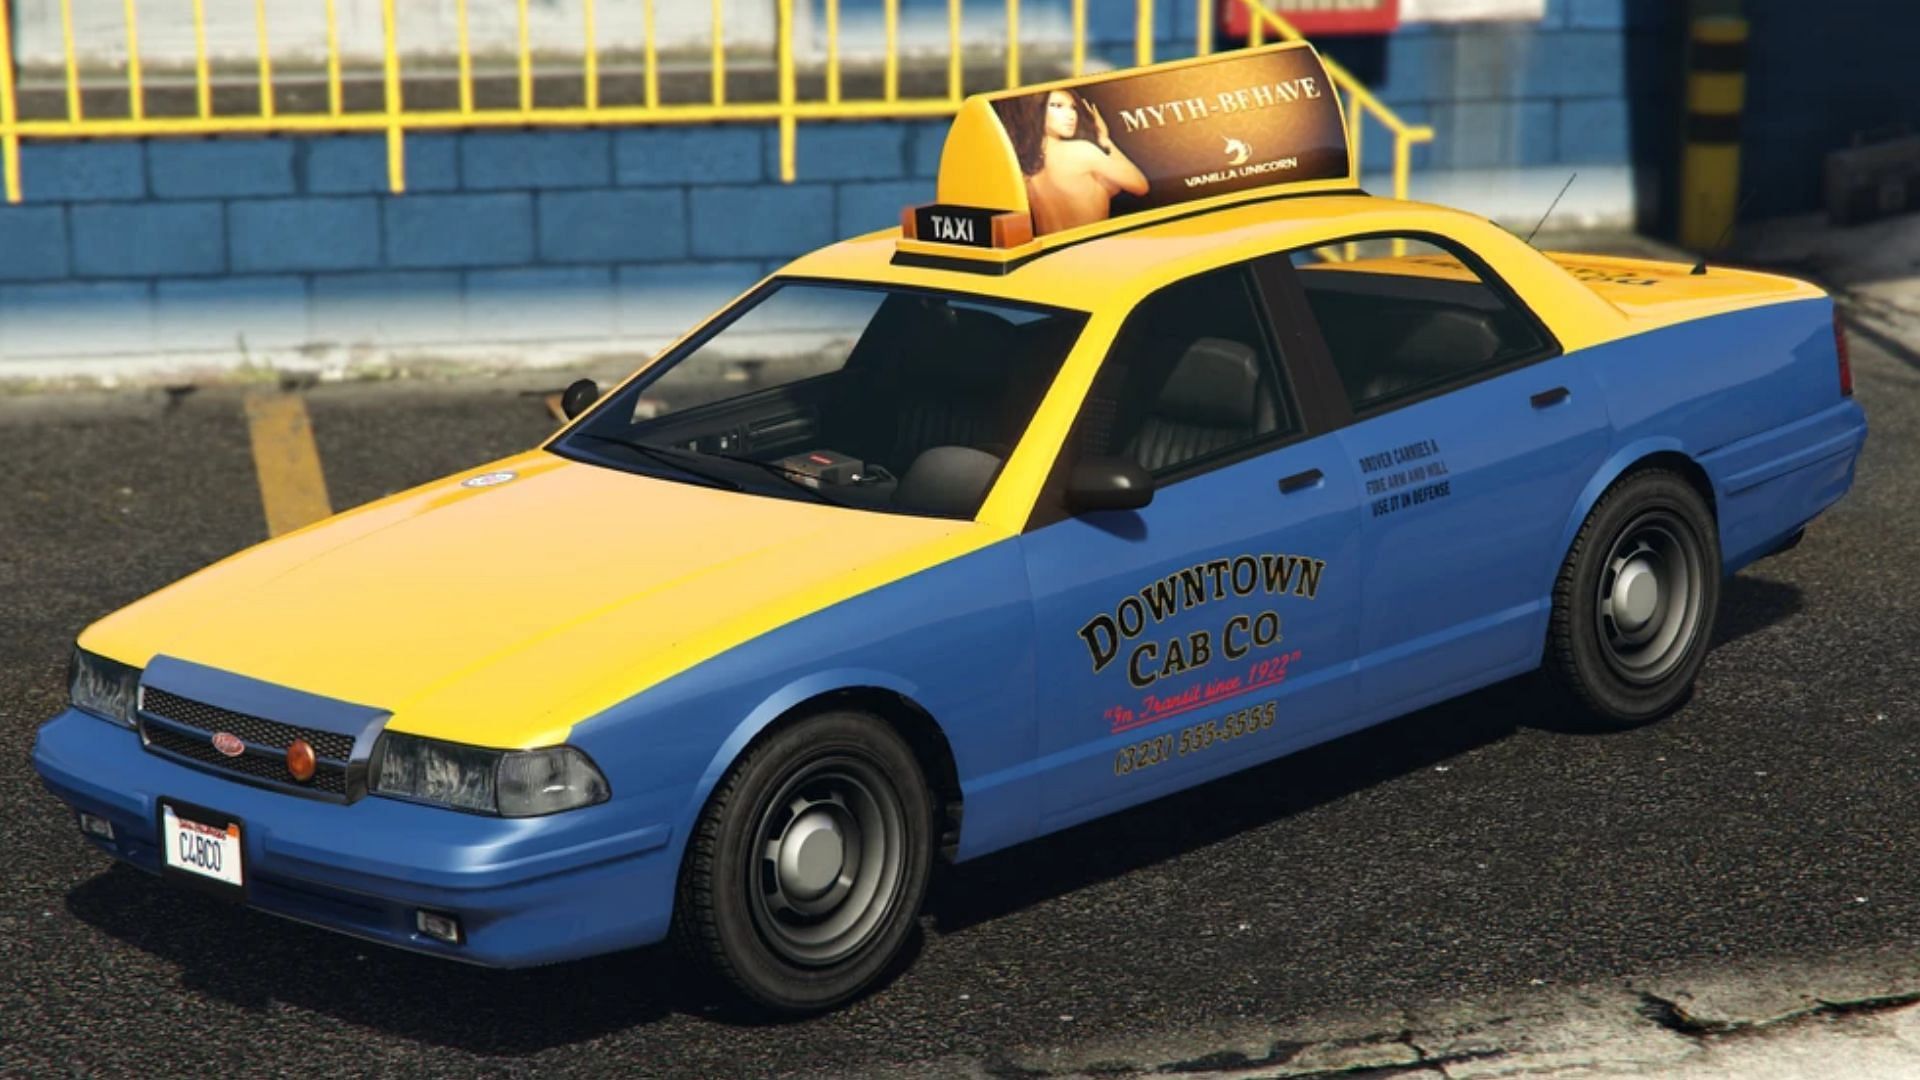 An image of the Taxi (Image via GTA Wiki)